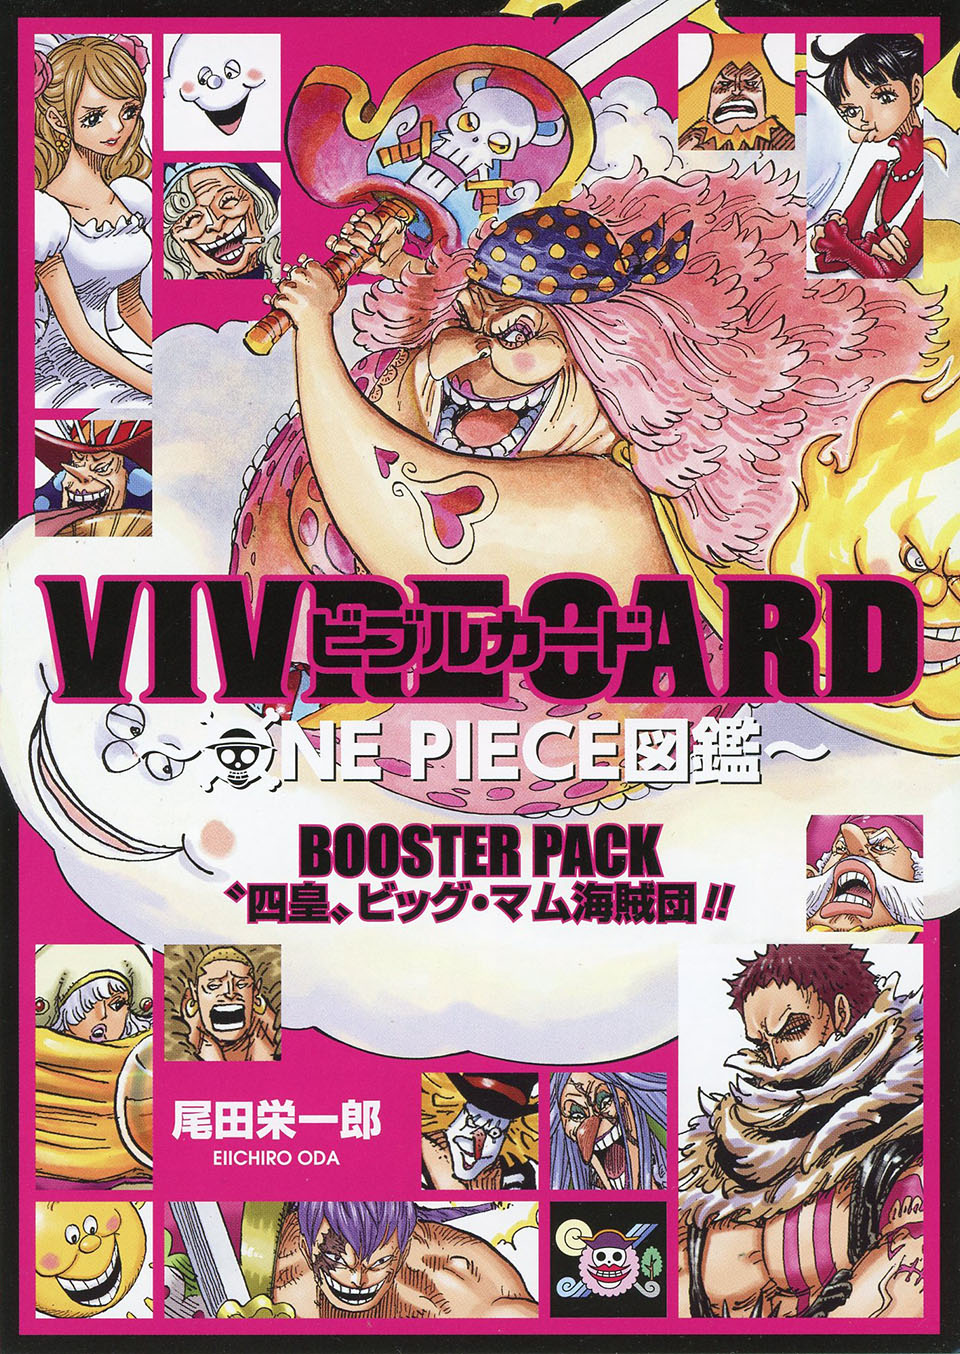 VIVRE CARD~ONE PIECE図鑑~ BOOSTER PACK “四皇”ビッグ・マム海賊団!!